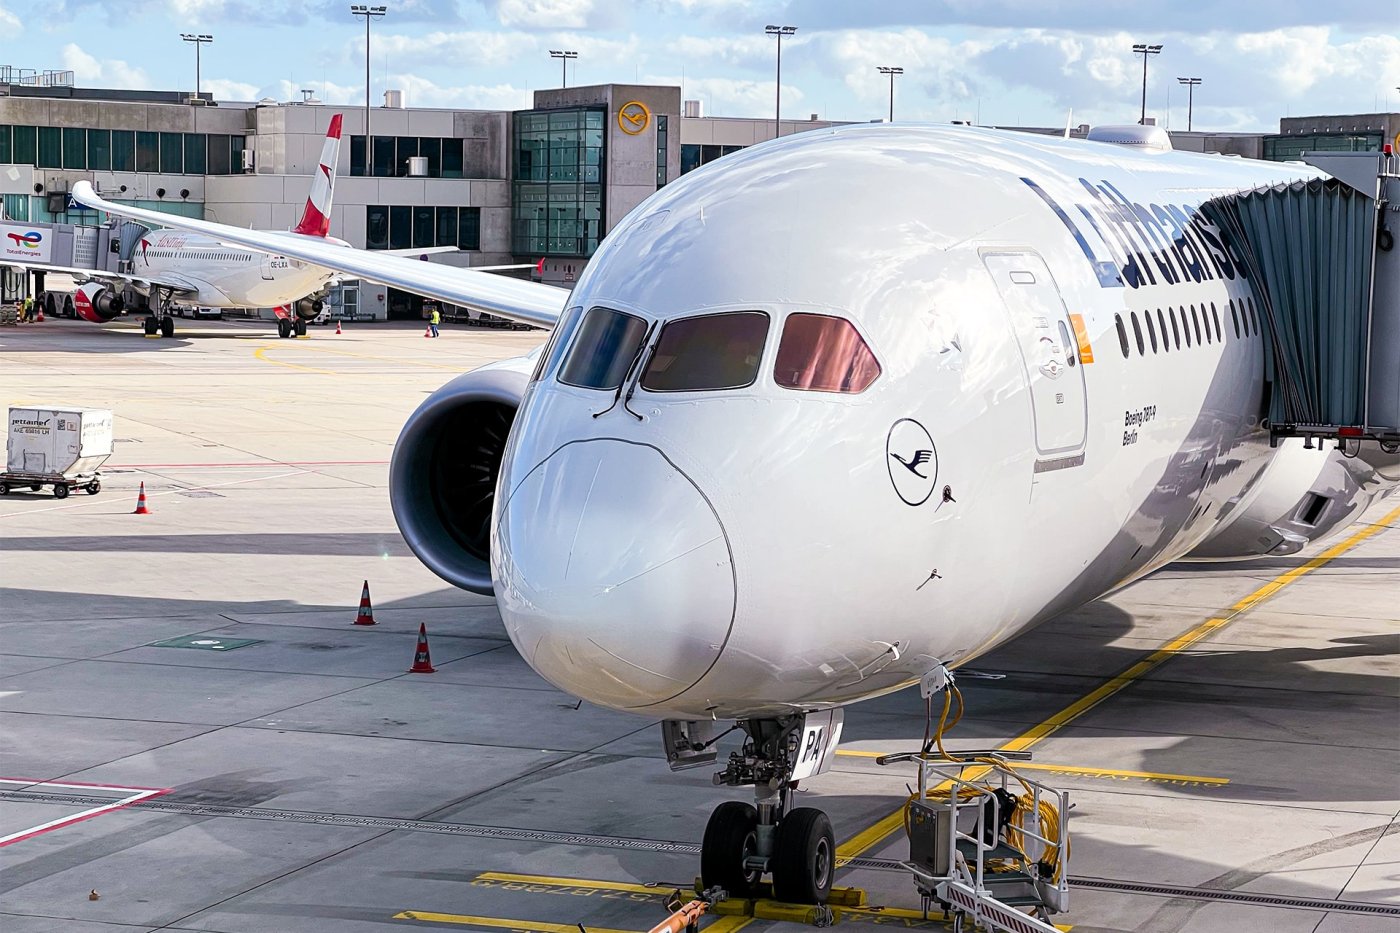 Flight review: Lufthansa from Frankfurt to Munich in Business